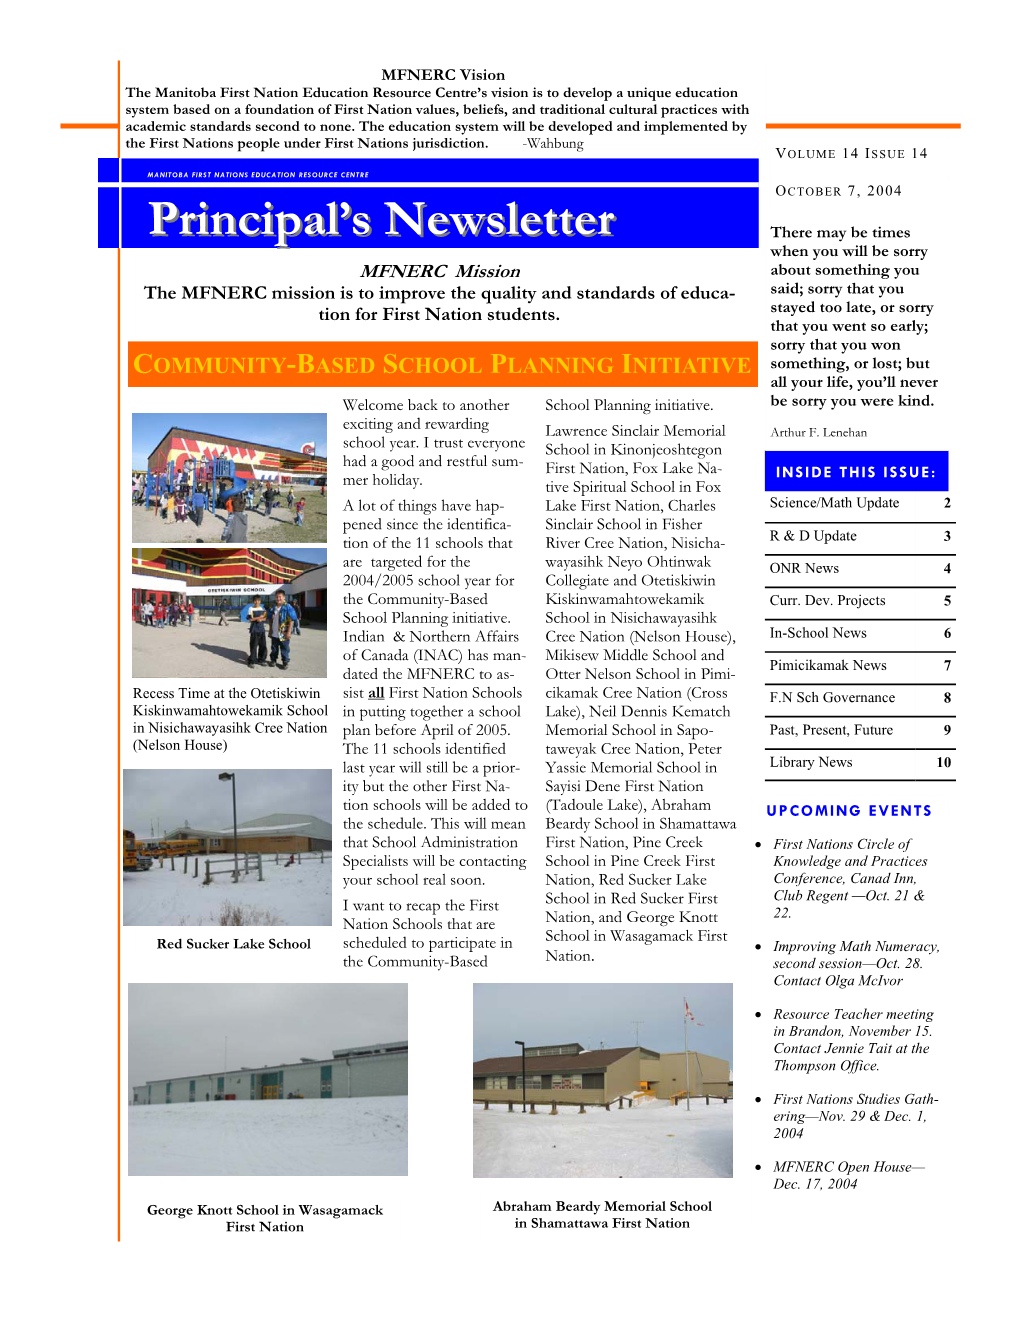 Principals Newsletter-#14